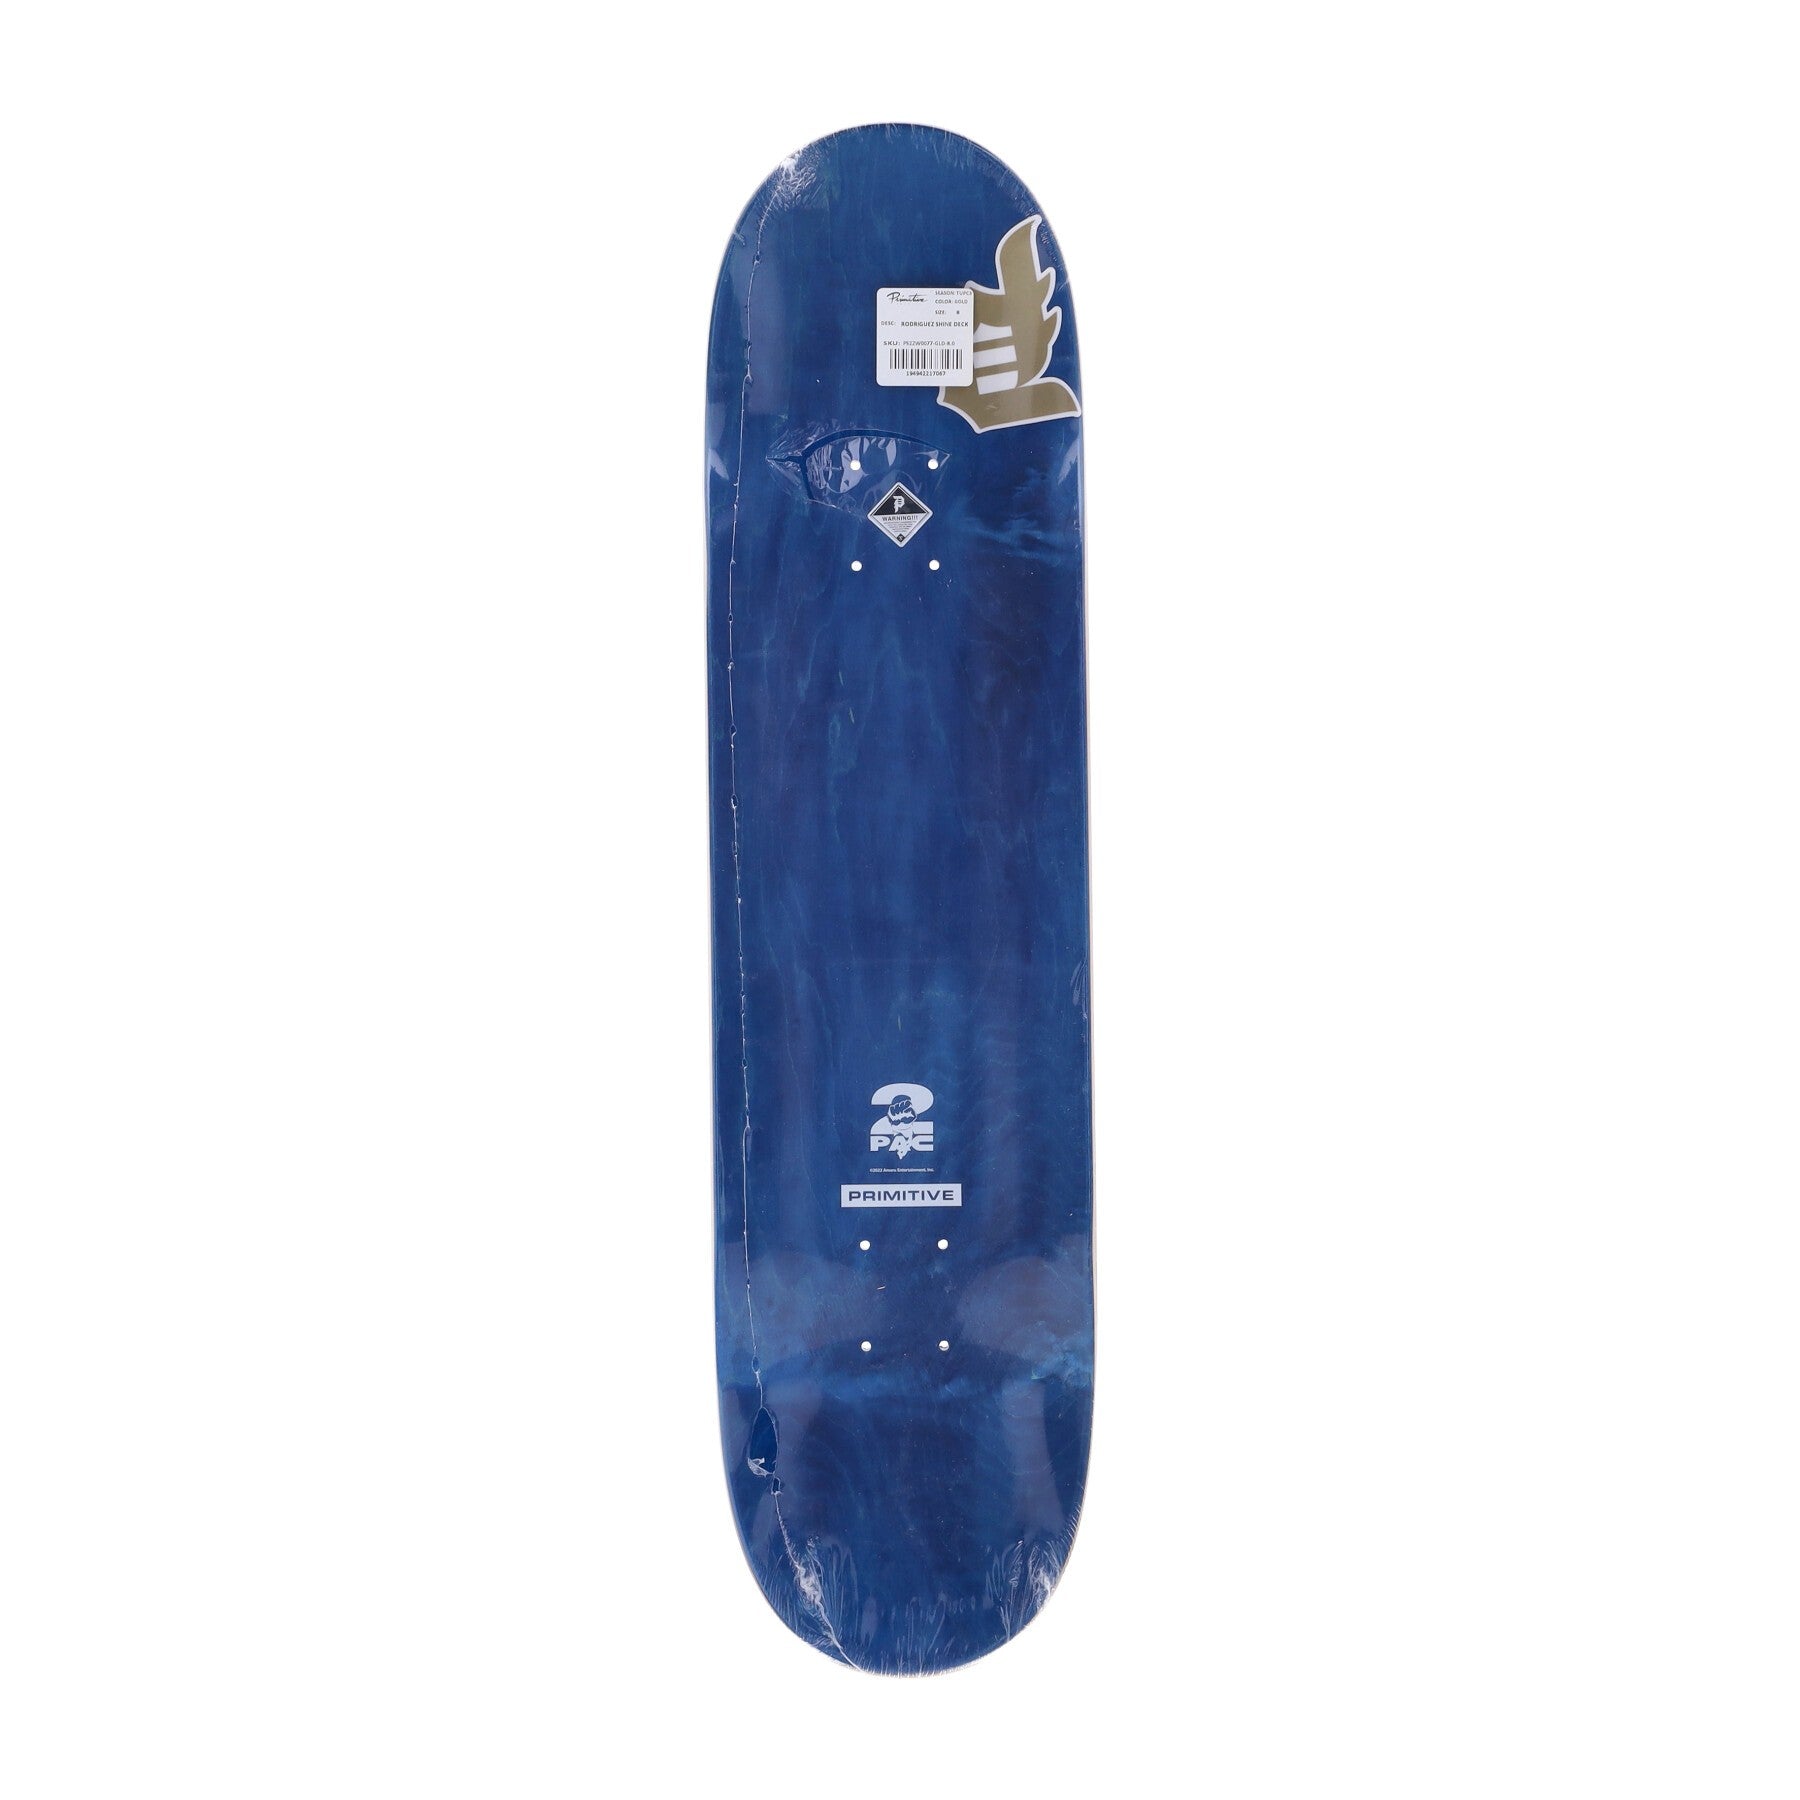 Primitive, Skateboard Tavola Uomo Rodriguez Shine Deck X 2pac, Blue